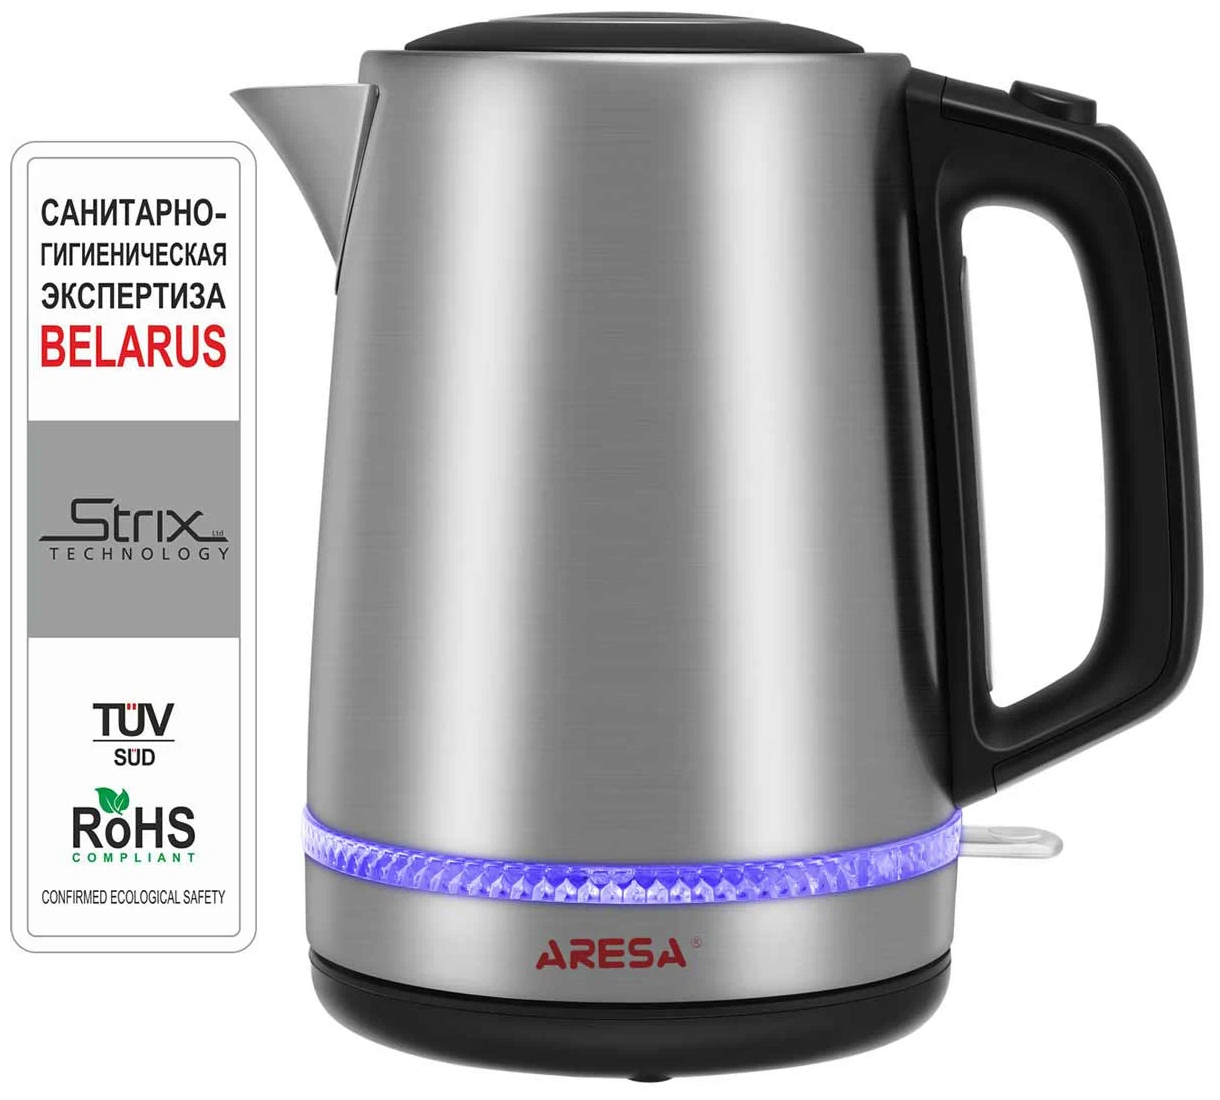 Чайник ARESA AR-3461, серебристый